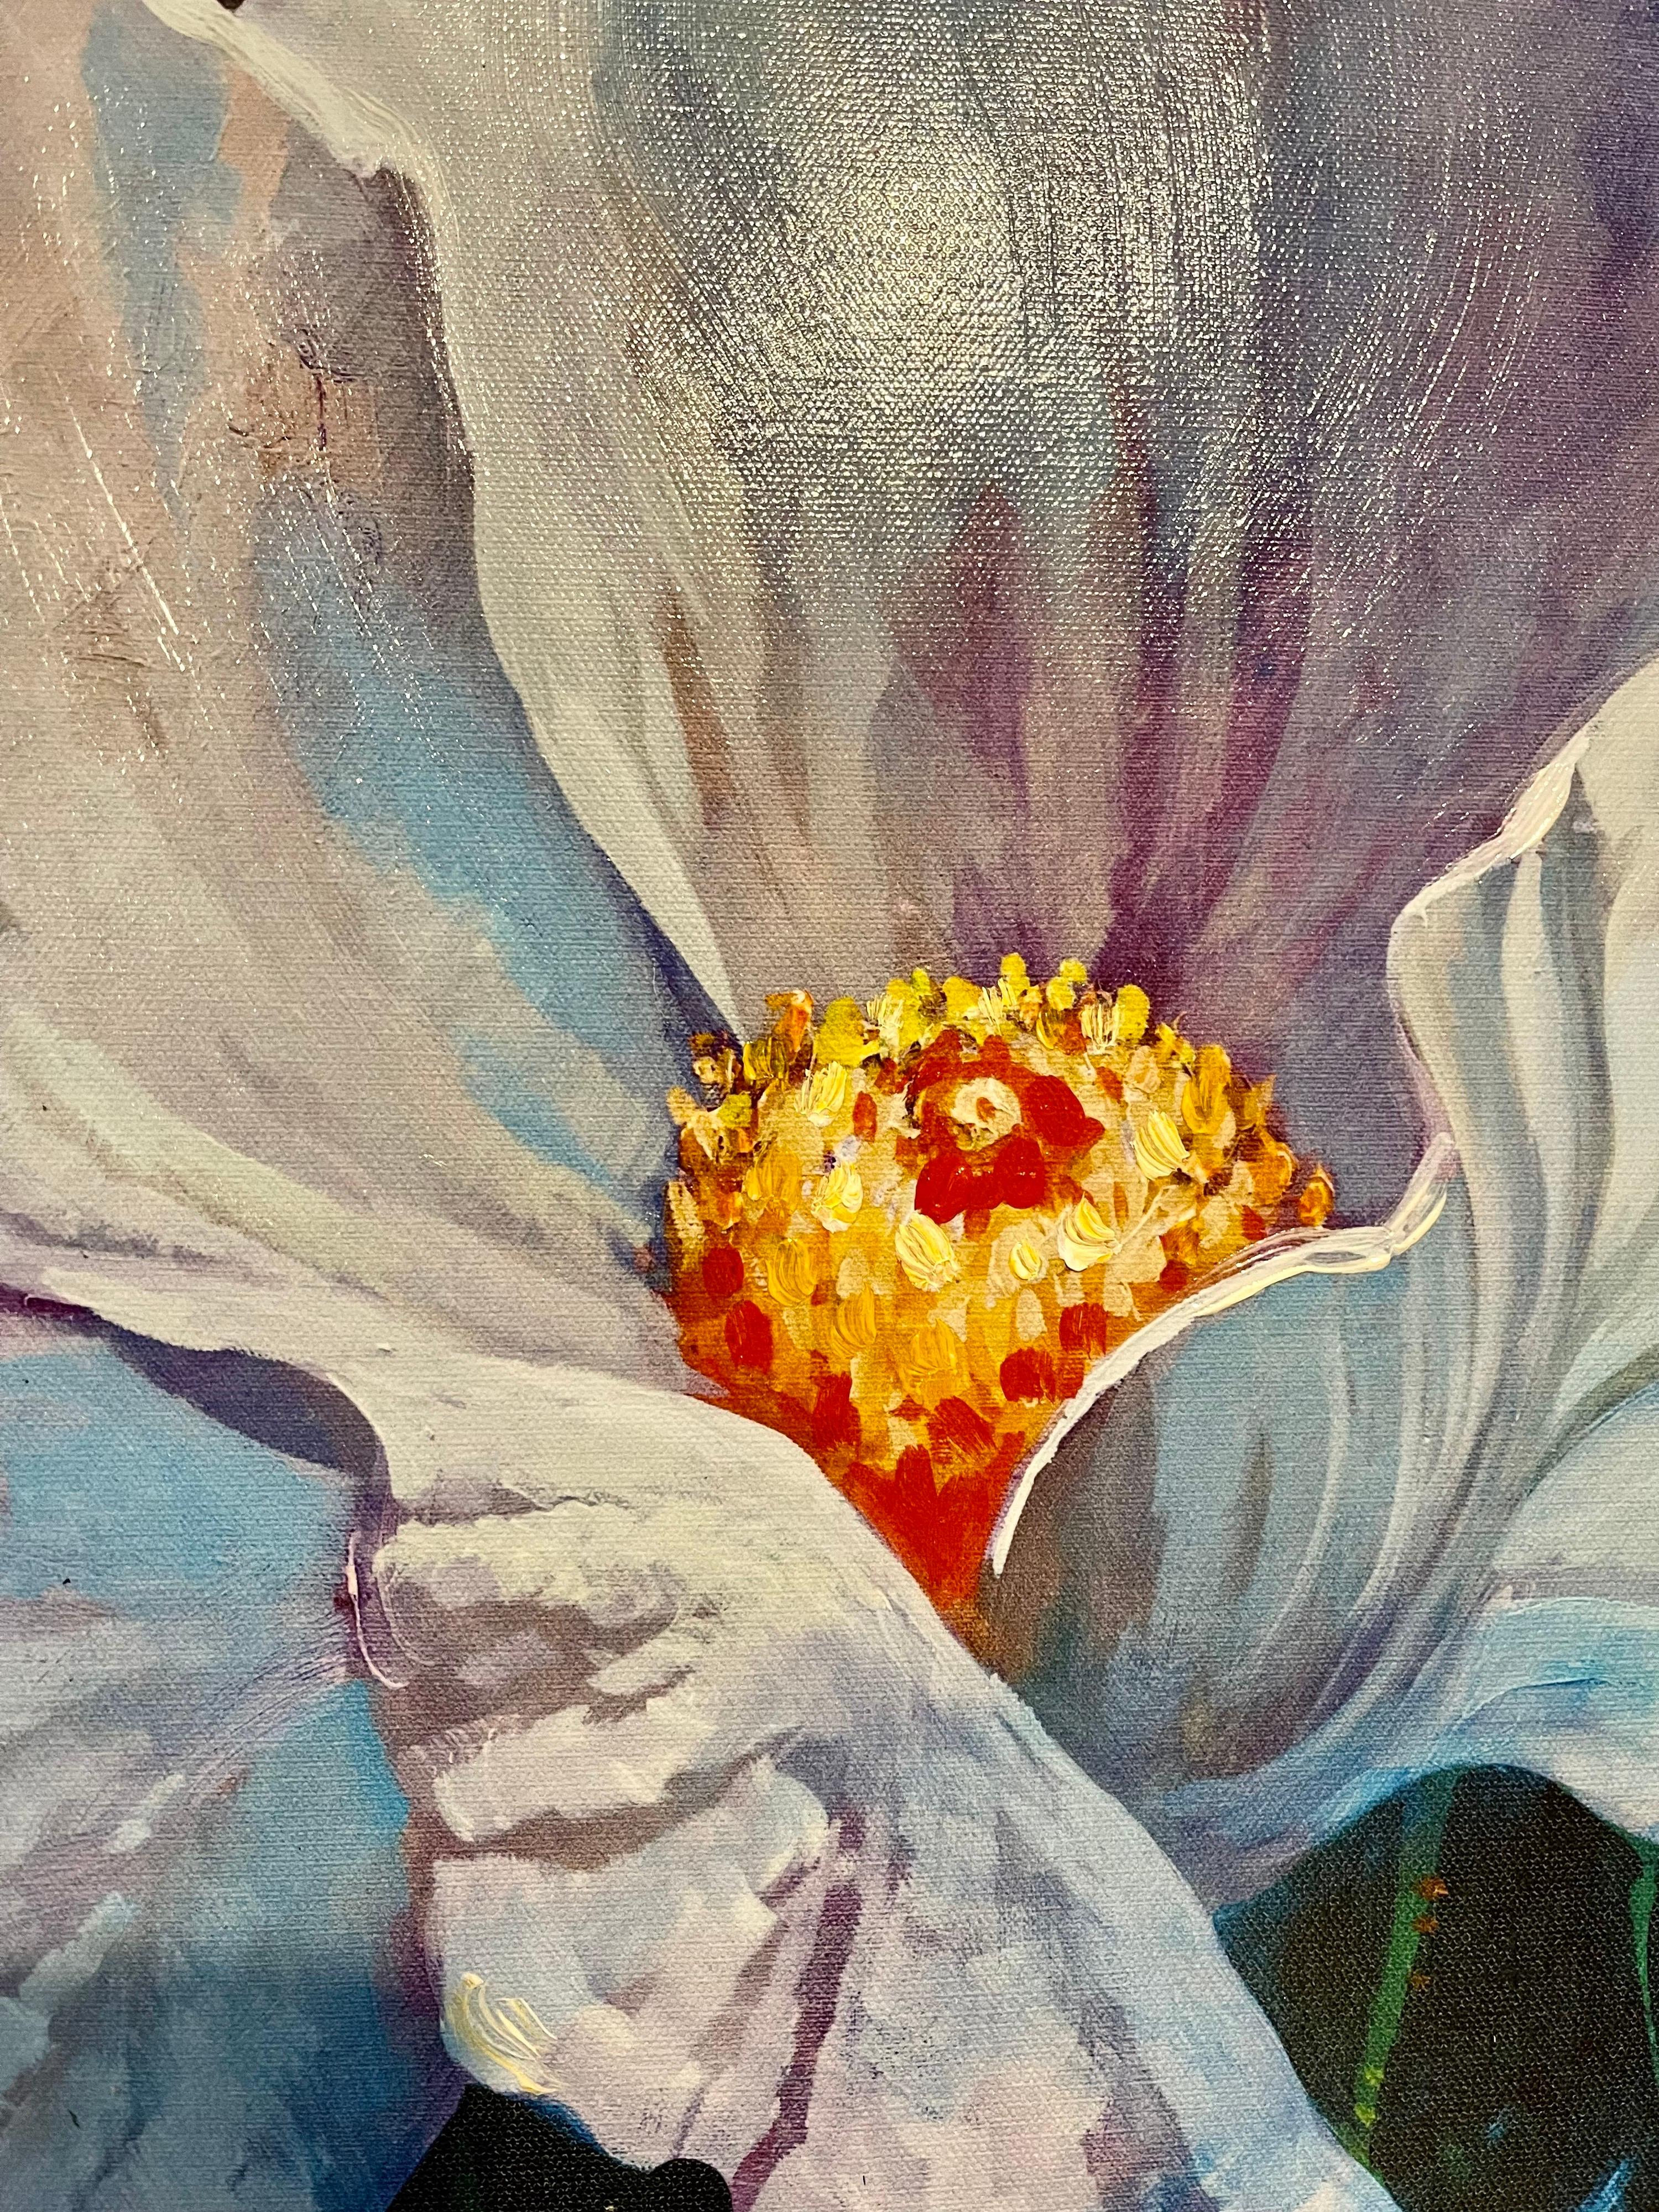 Vibrant Pop Art Flower Original Simon Bull Floral Giclee Canvas Painting Edition For Sale 2